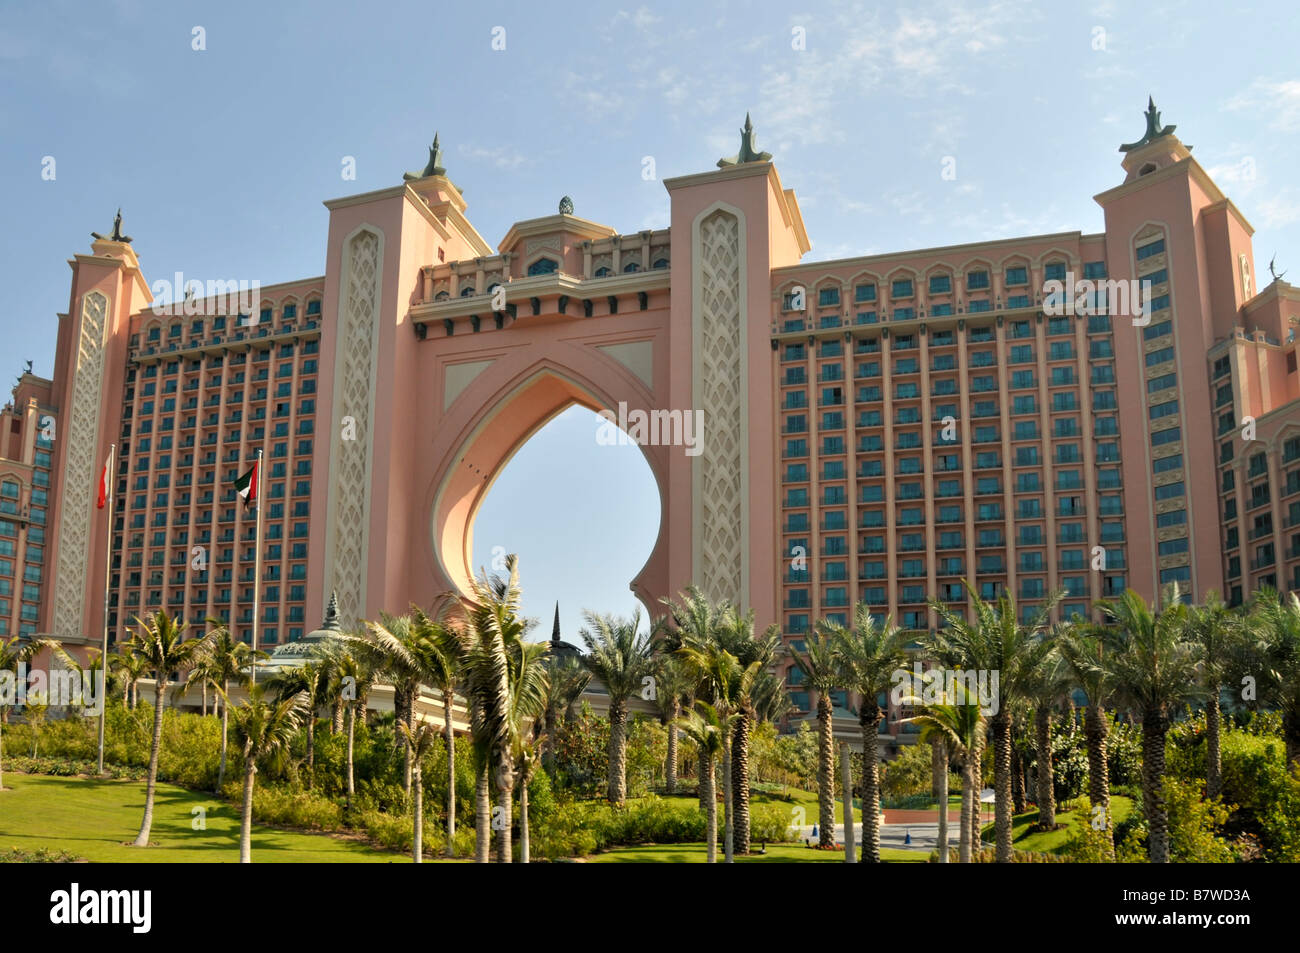 Dubai Atlantis the Palm Hotel and resort complex Stock Photo